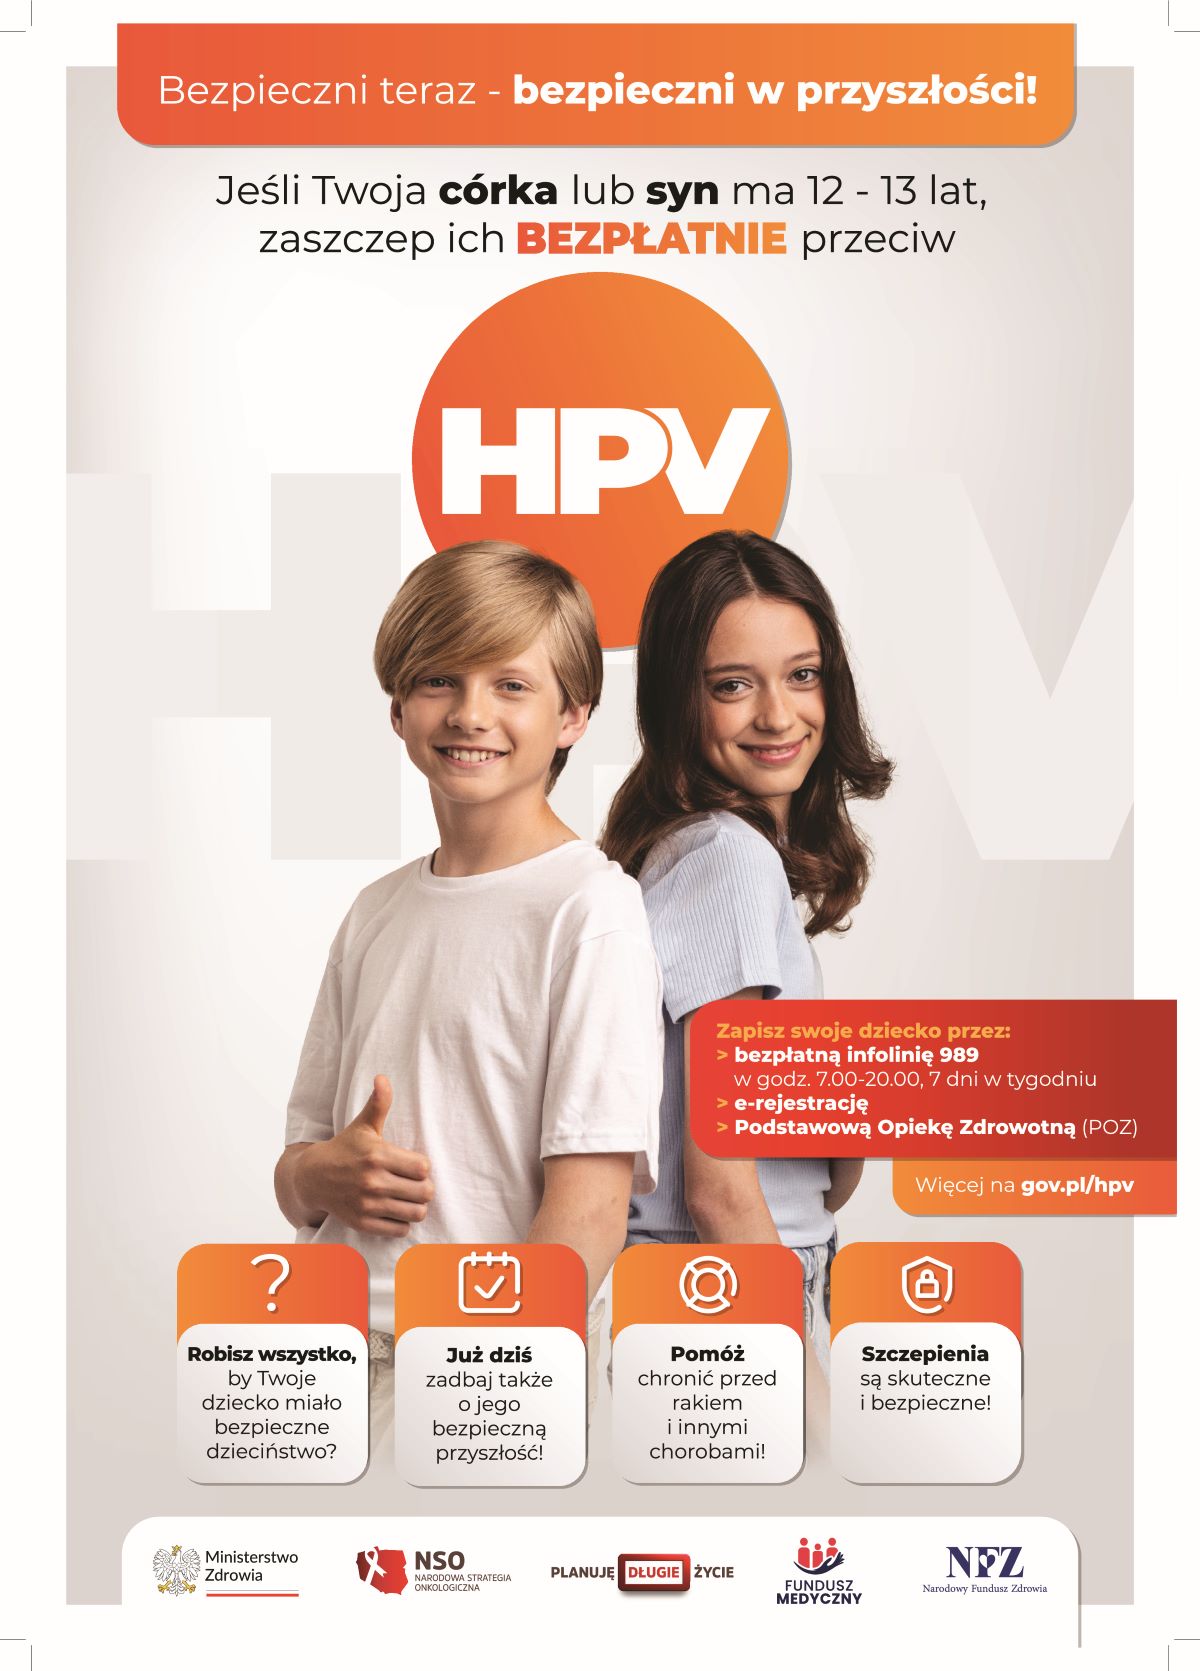 Universal HPV vaccination program